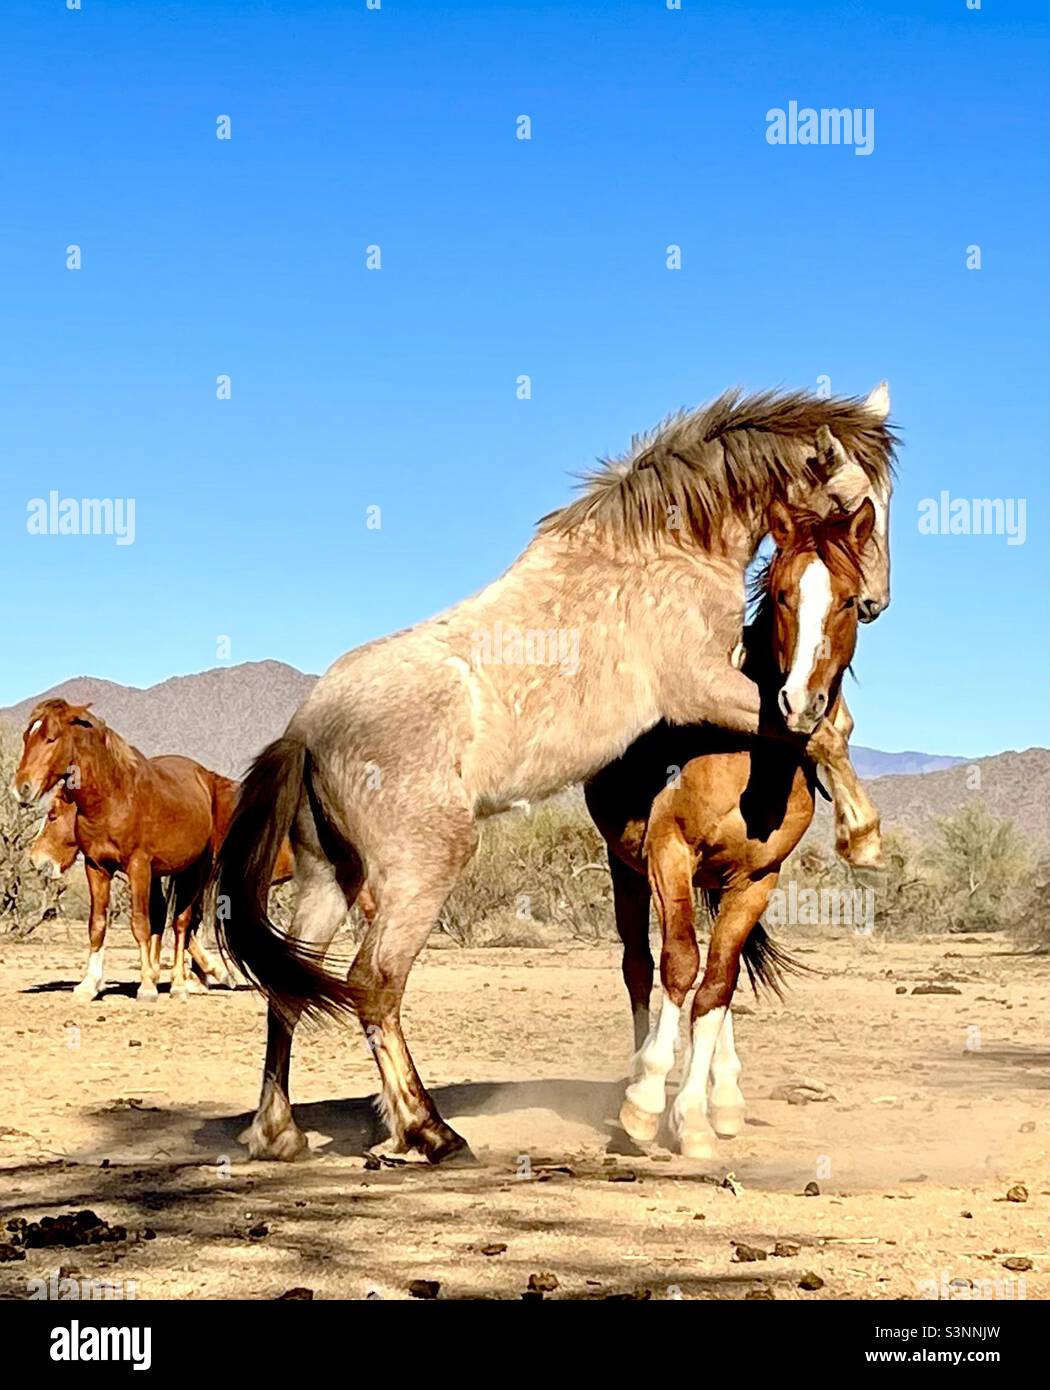 Wild horses mating Stock Photo - Alamy